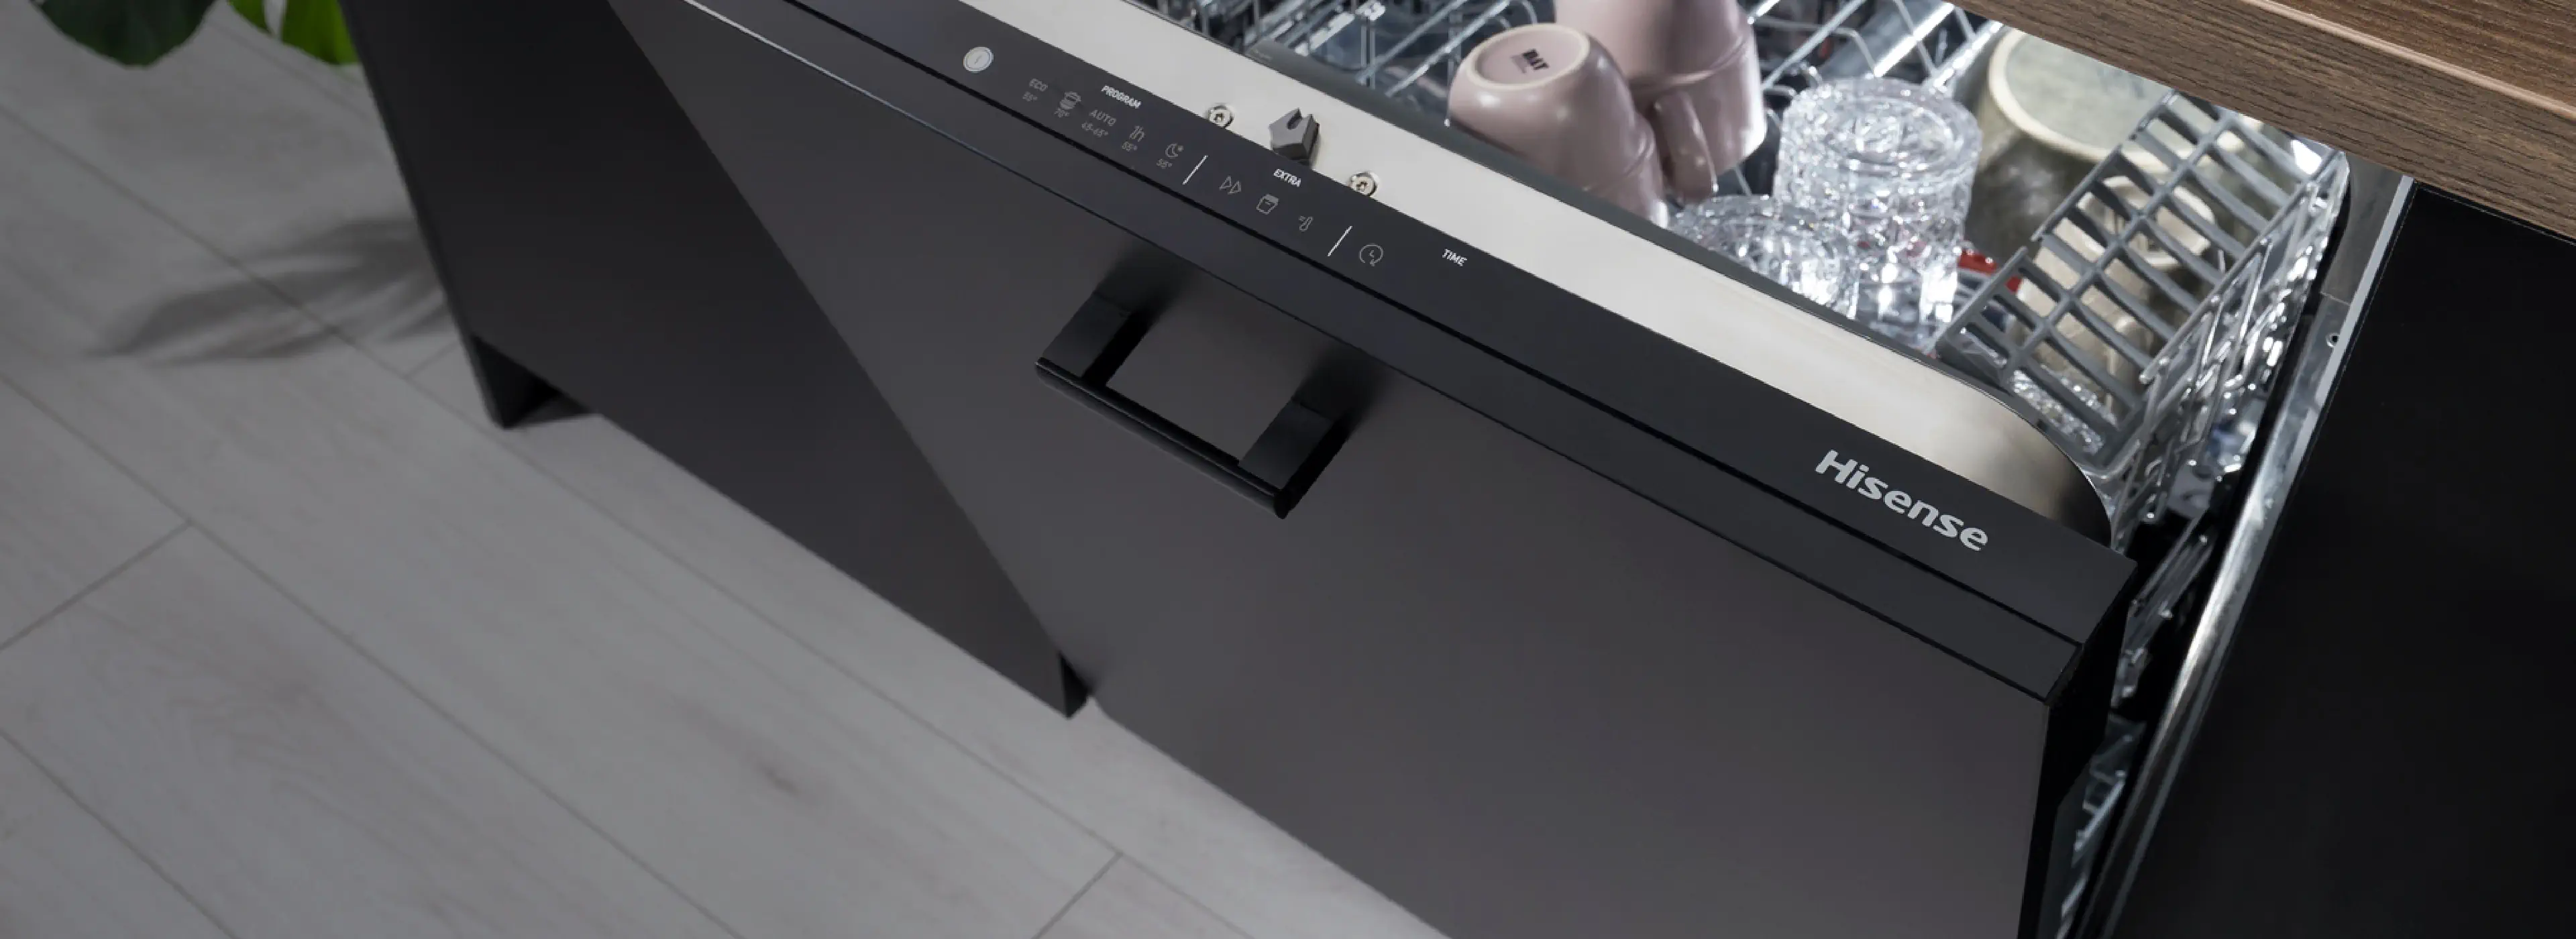 dishwasher-listing-3840x1400.webp